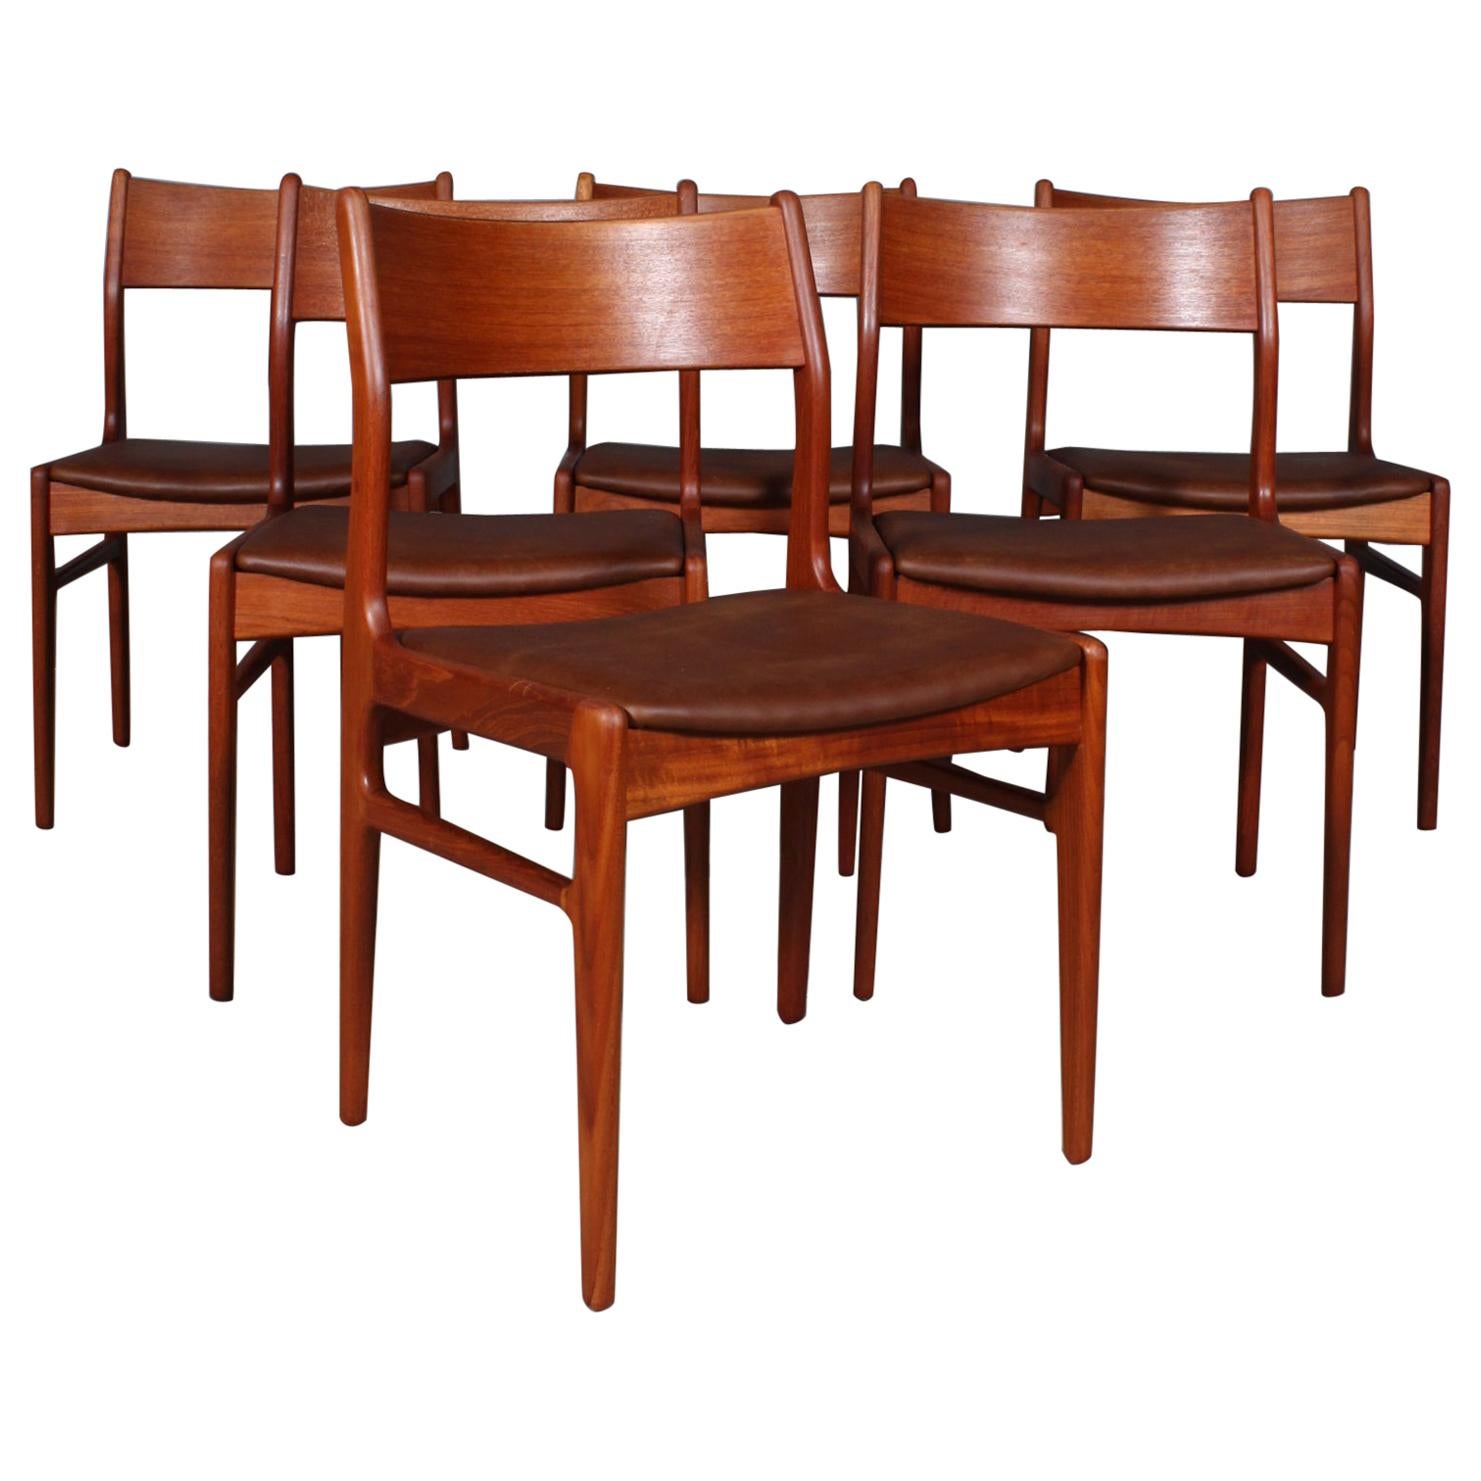 Funder-Schmidt & Madsen, Six Dining Chairs, Teak, 1960s